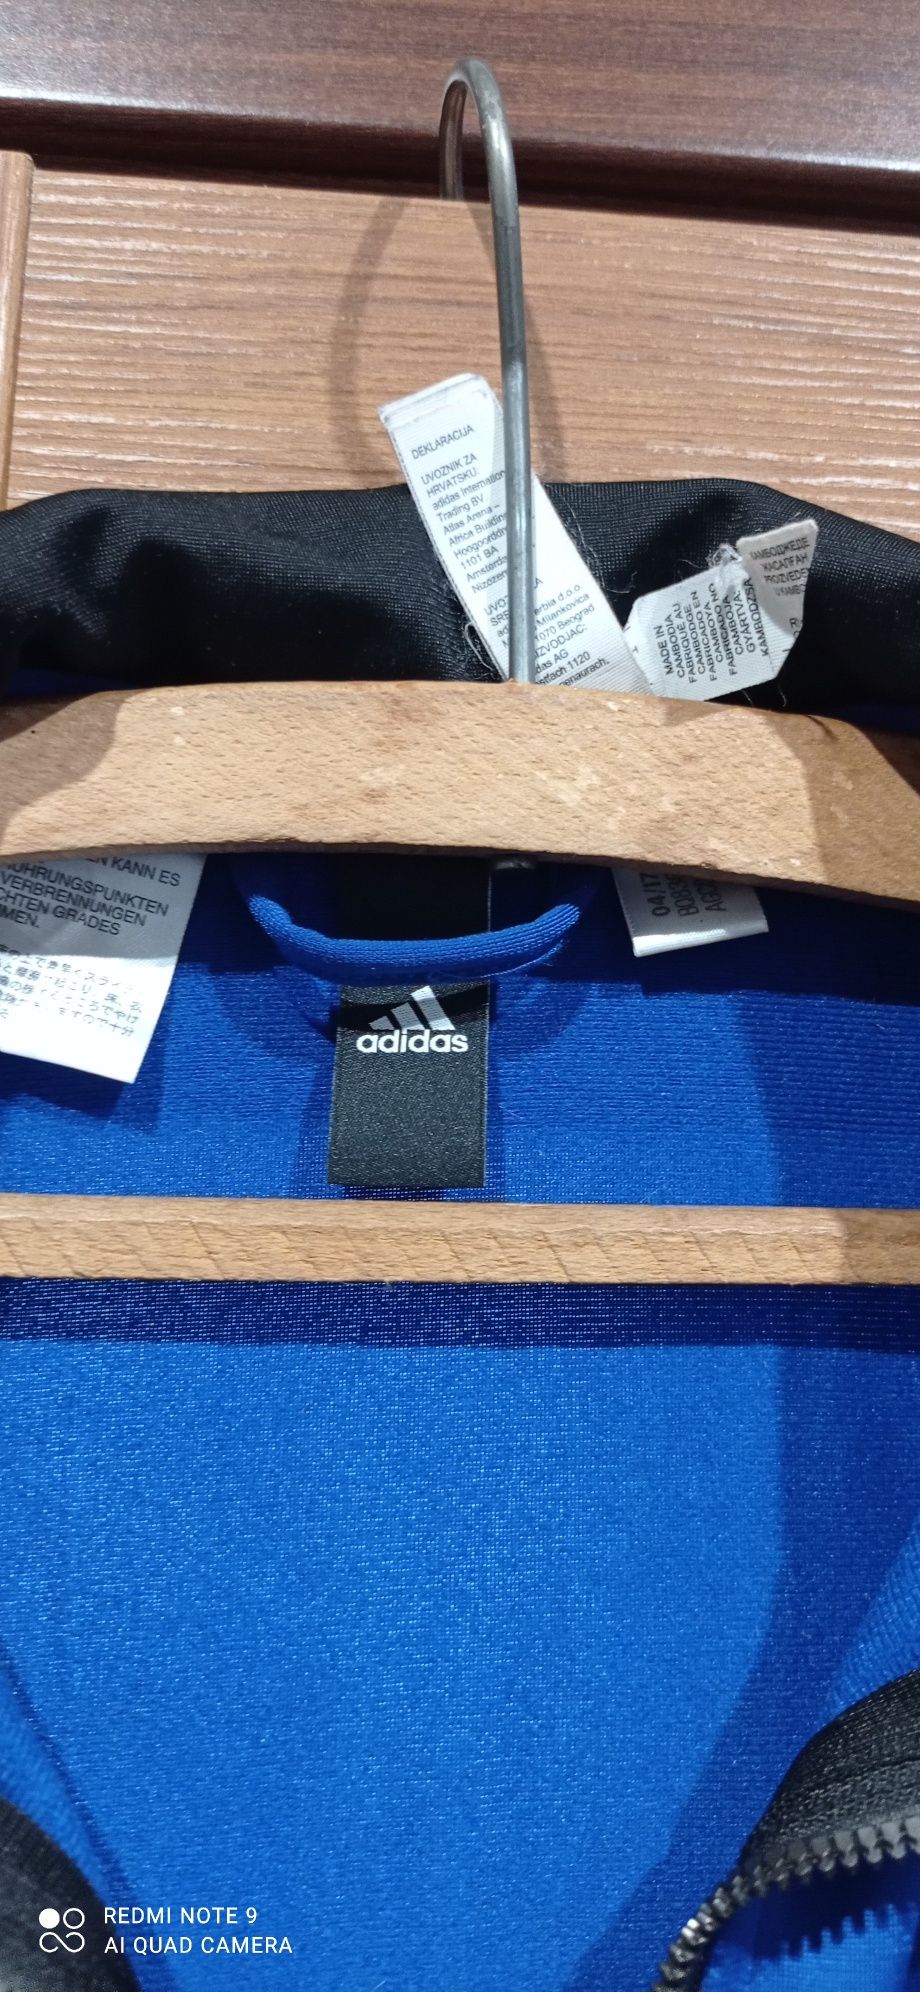 Bluza Adidas rozmiar na metce stan bdb